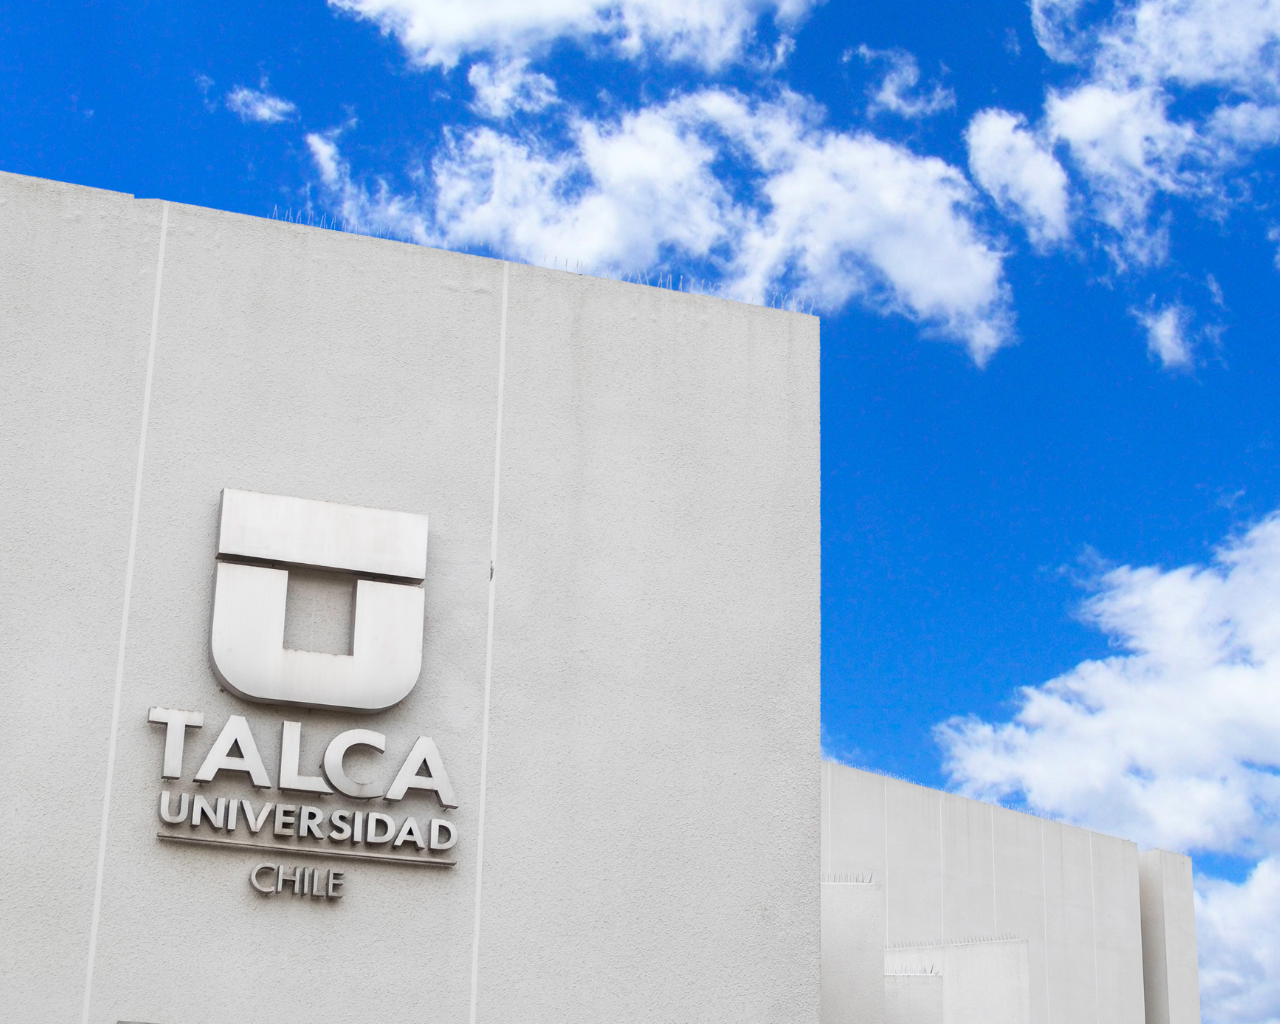 UTalca | Universidad de Talca